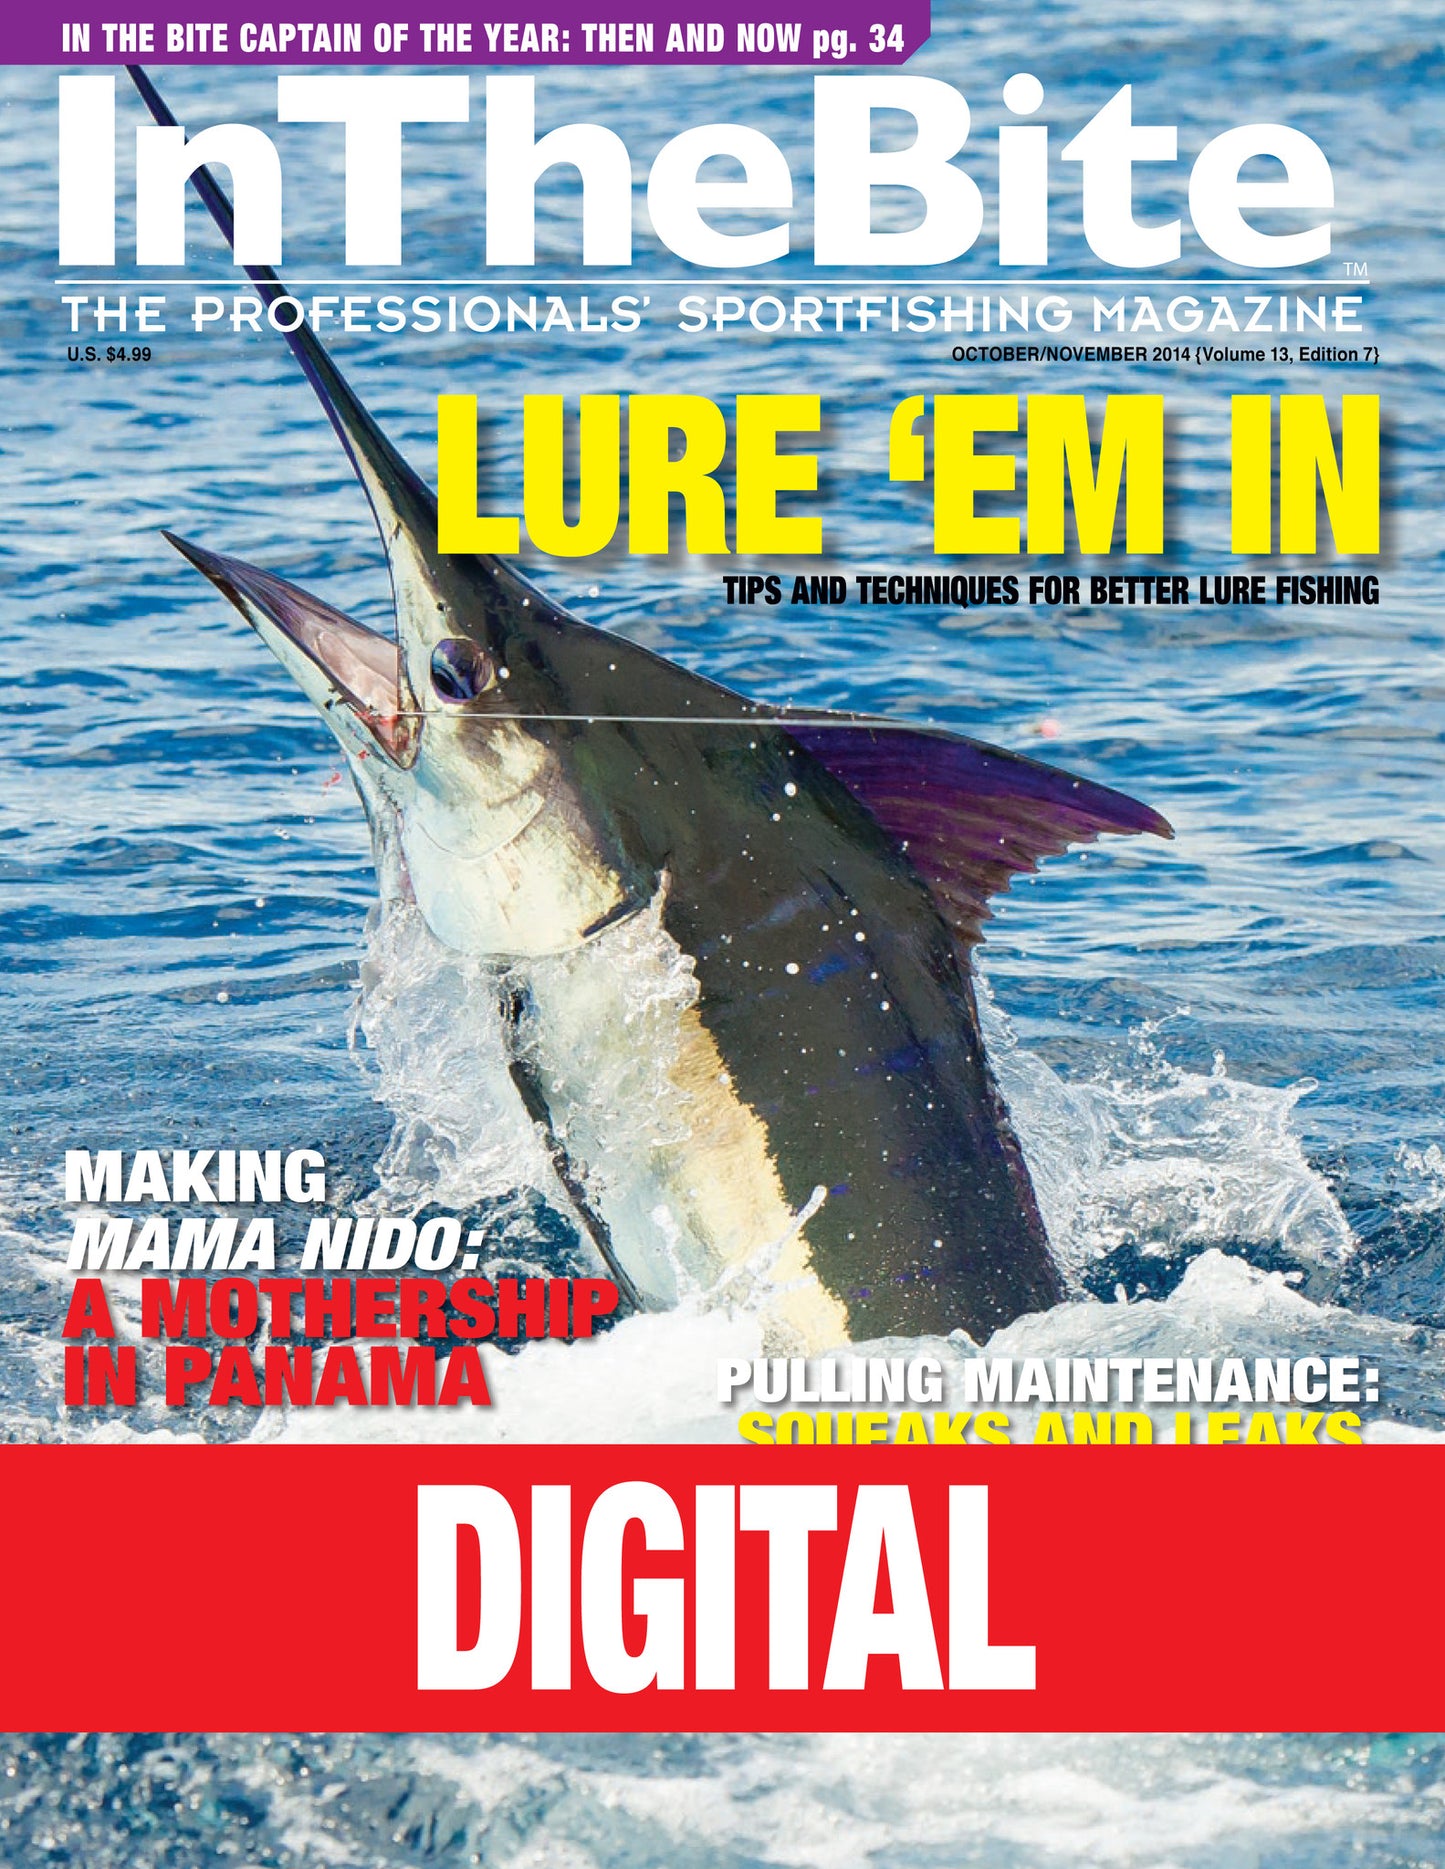 InTheBite Volume 13 Edition 08 - December Issue - Digital Edition